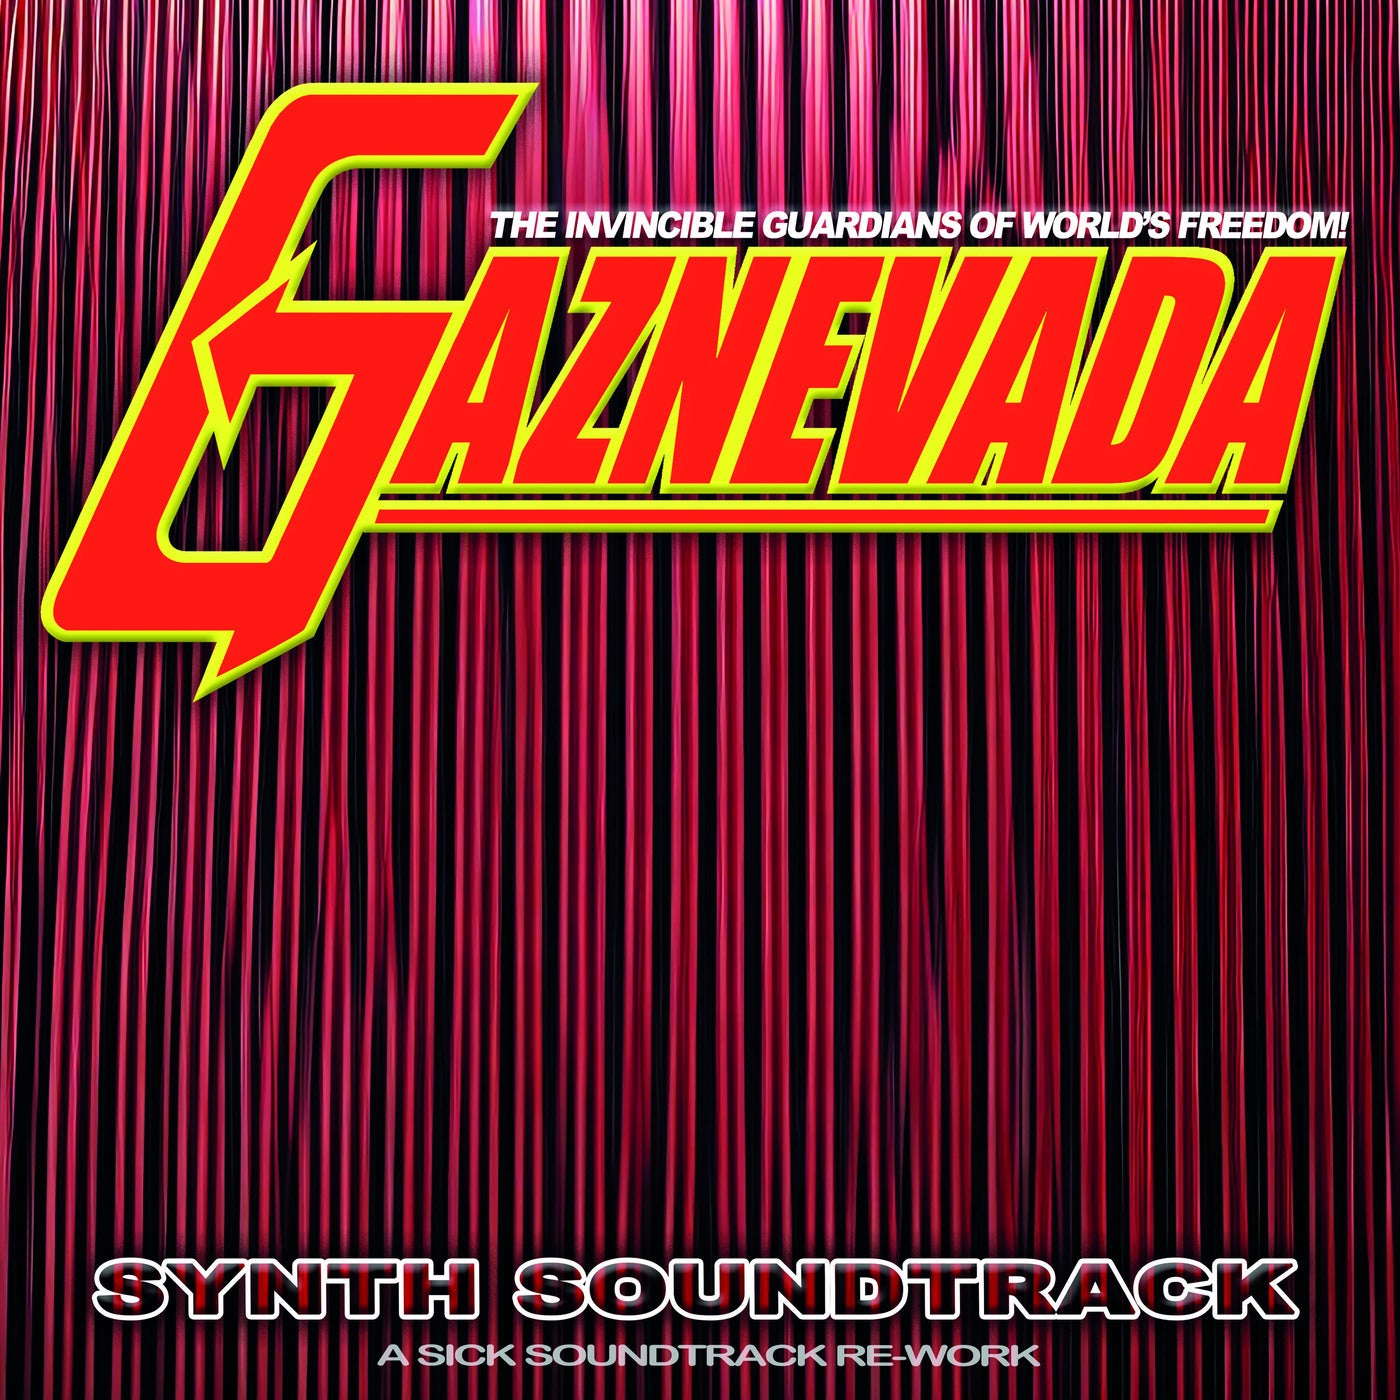 Synth Soundtrack